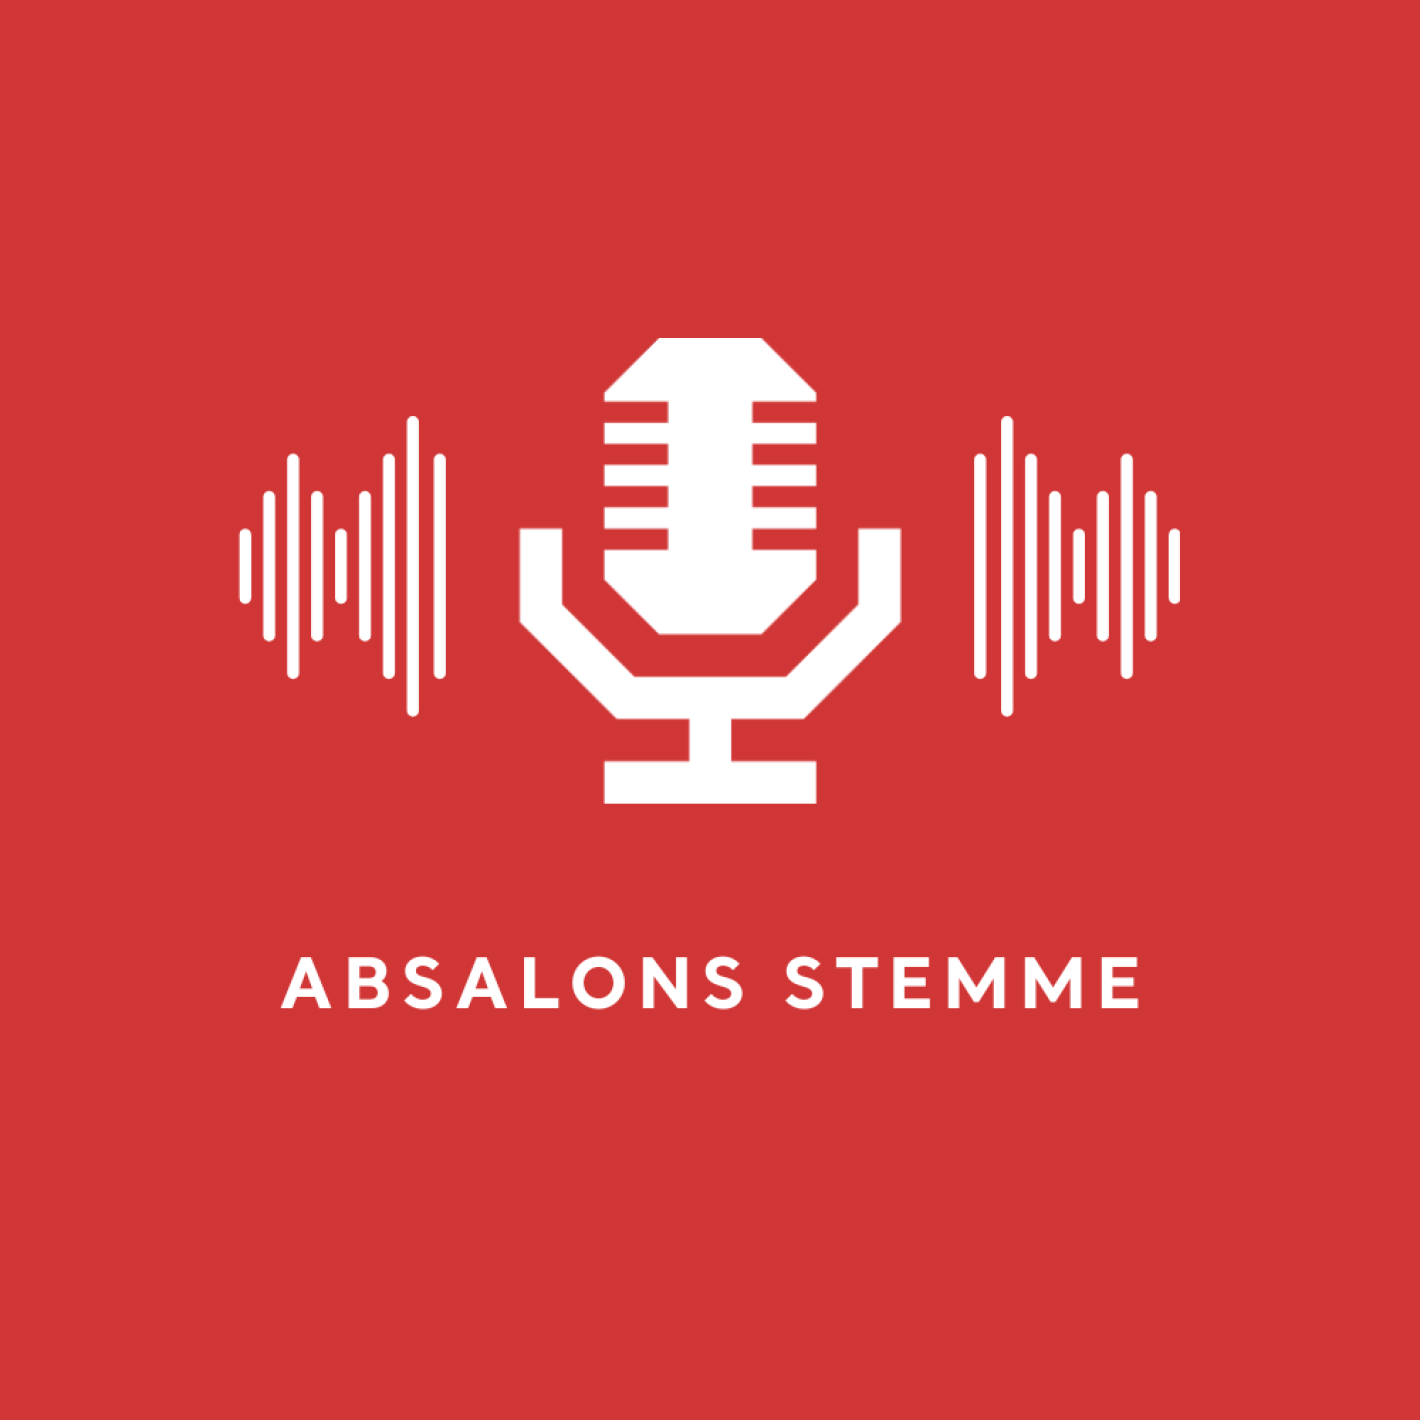 Absalons stemme logo